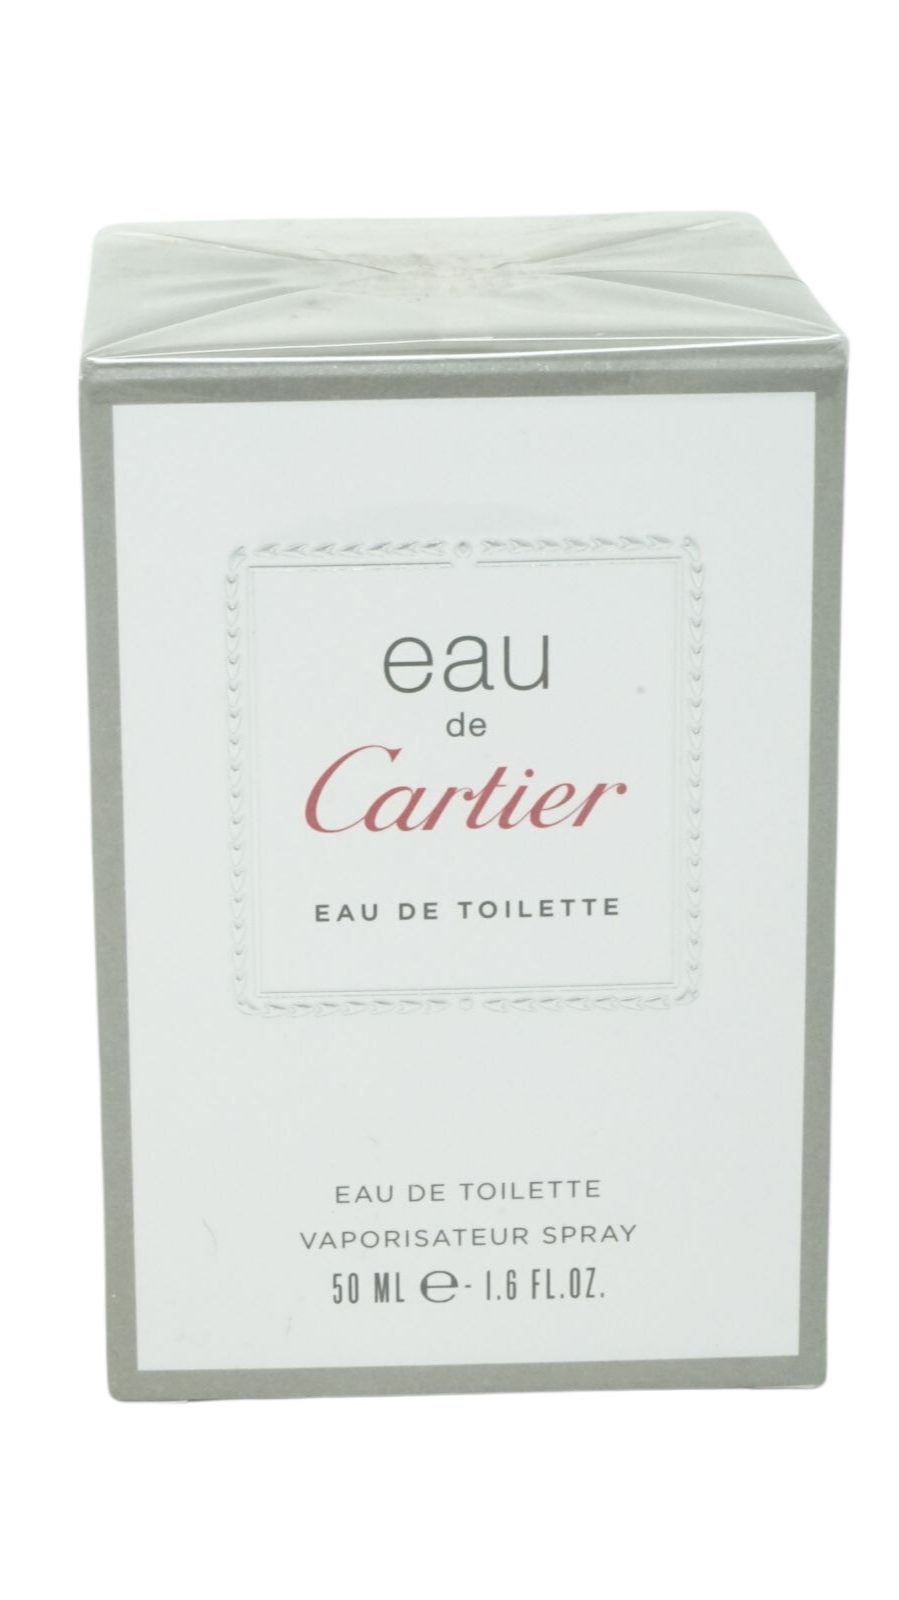 Cartier Eau Toilette Cartier de Eau Toilette Eau de Cartier Spray 50ml de